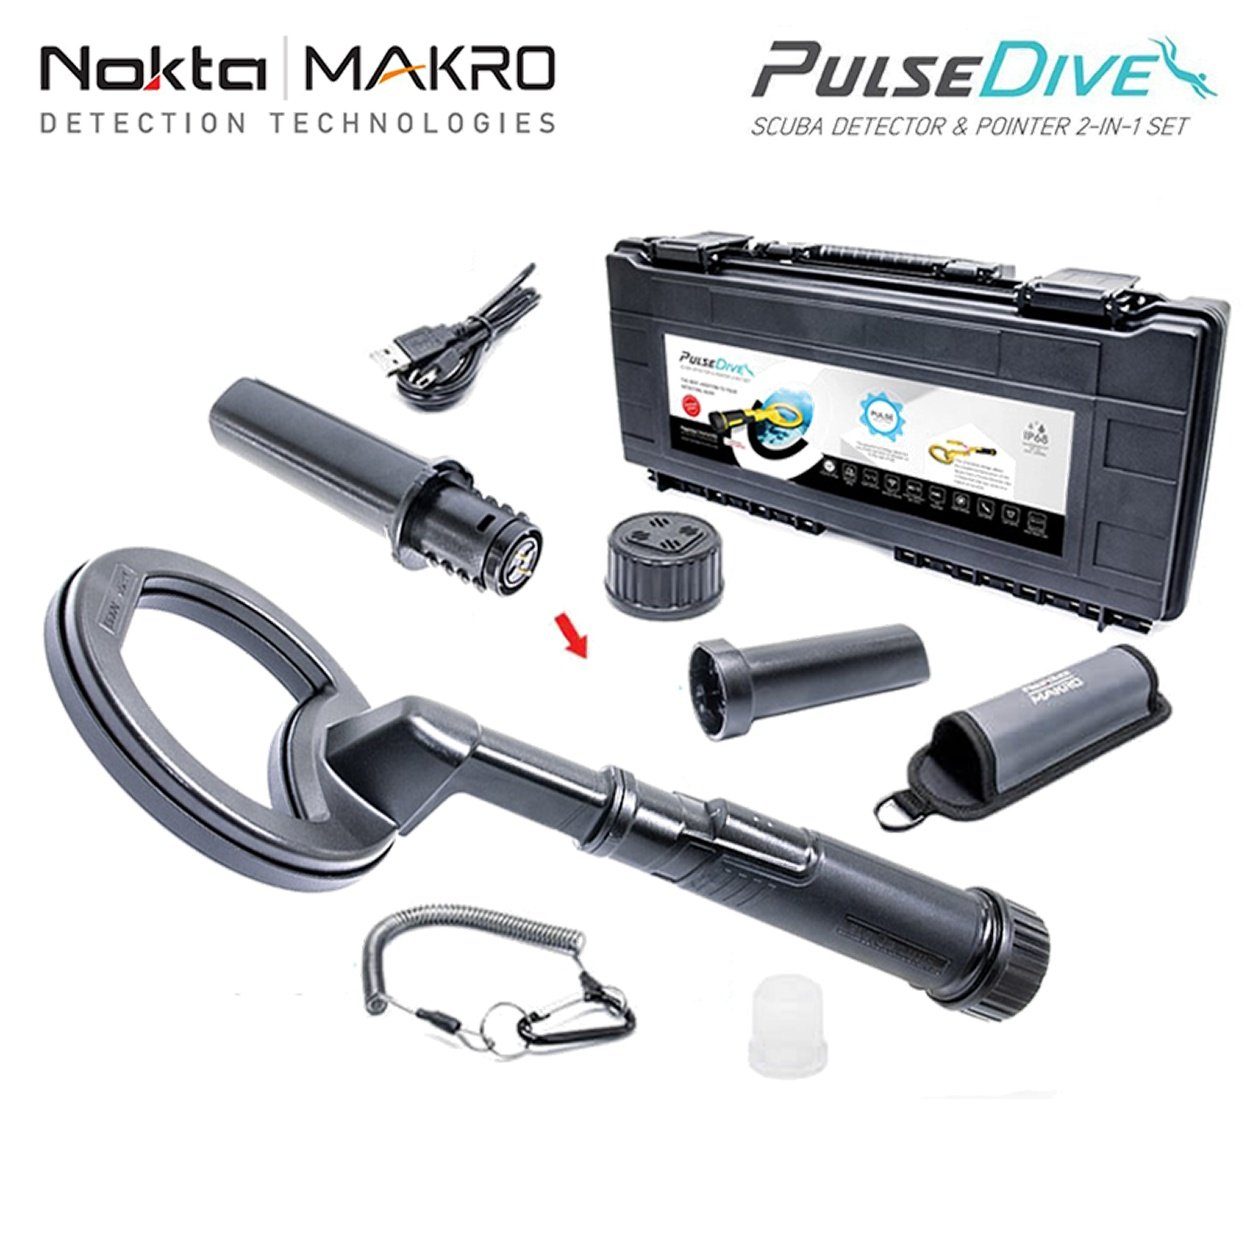 Black Makro Metalldetektor Metalldetektor Unterwasserdetektor Nokta Nokta Schwarz PulseDive